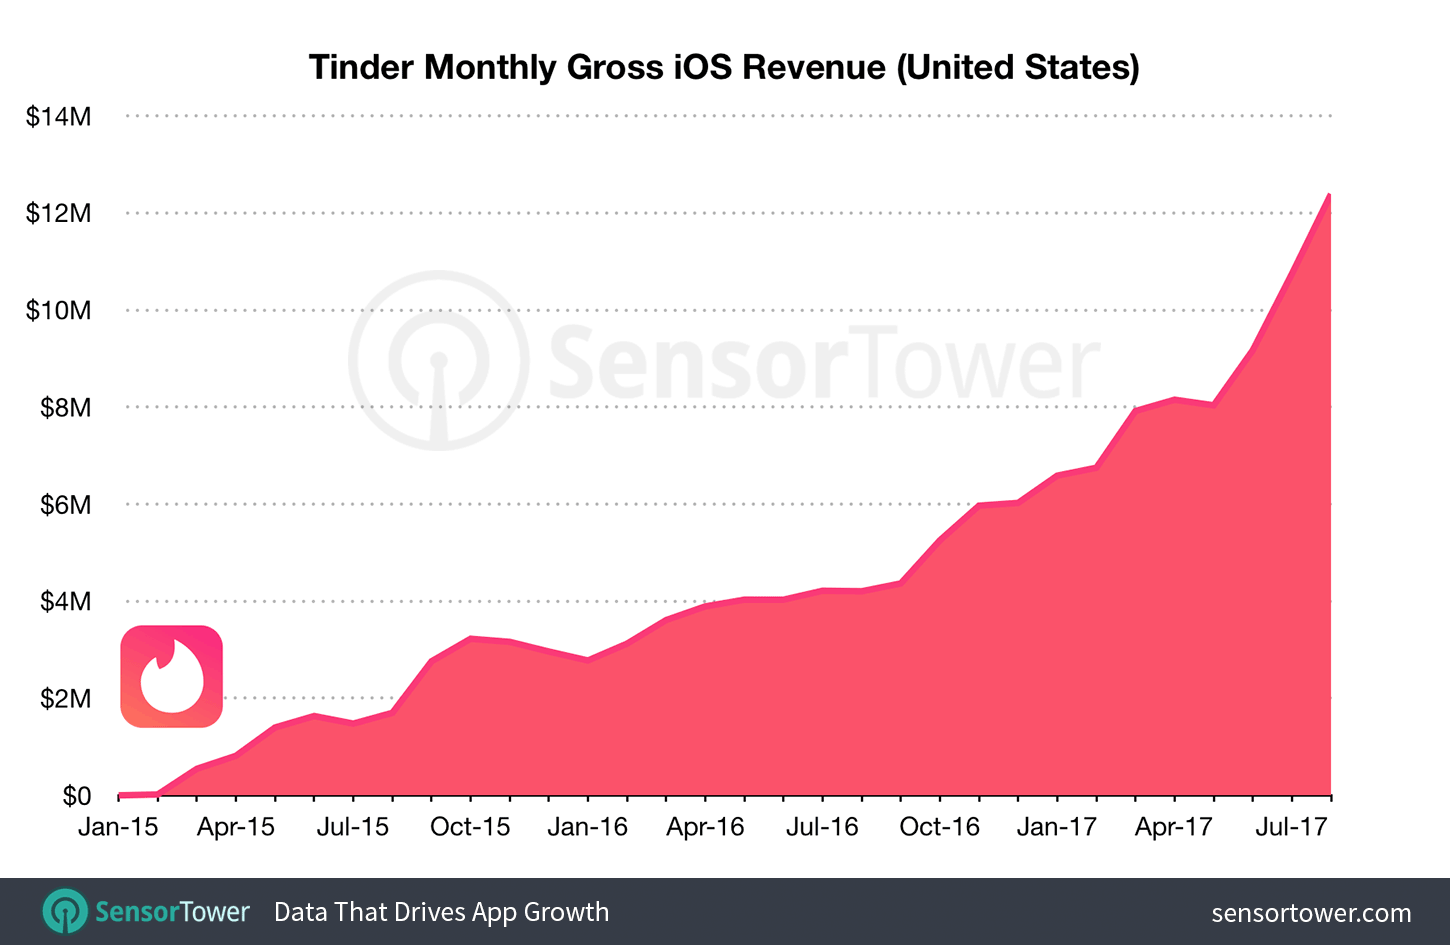 Tinder Monthly U.S. iPhone Gross Revenue